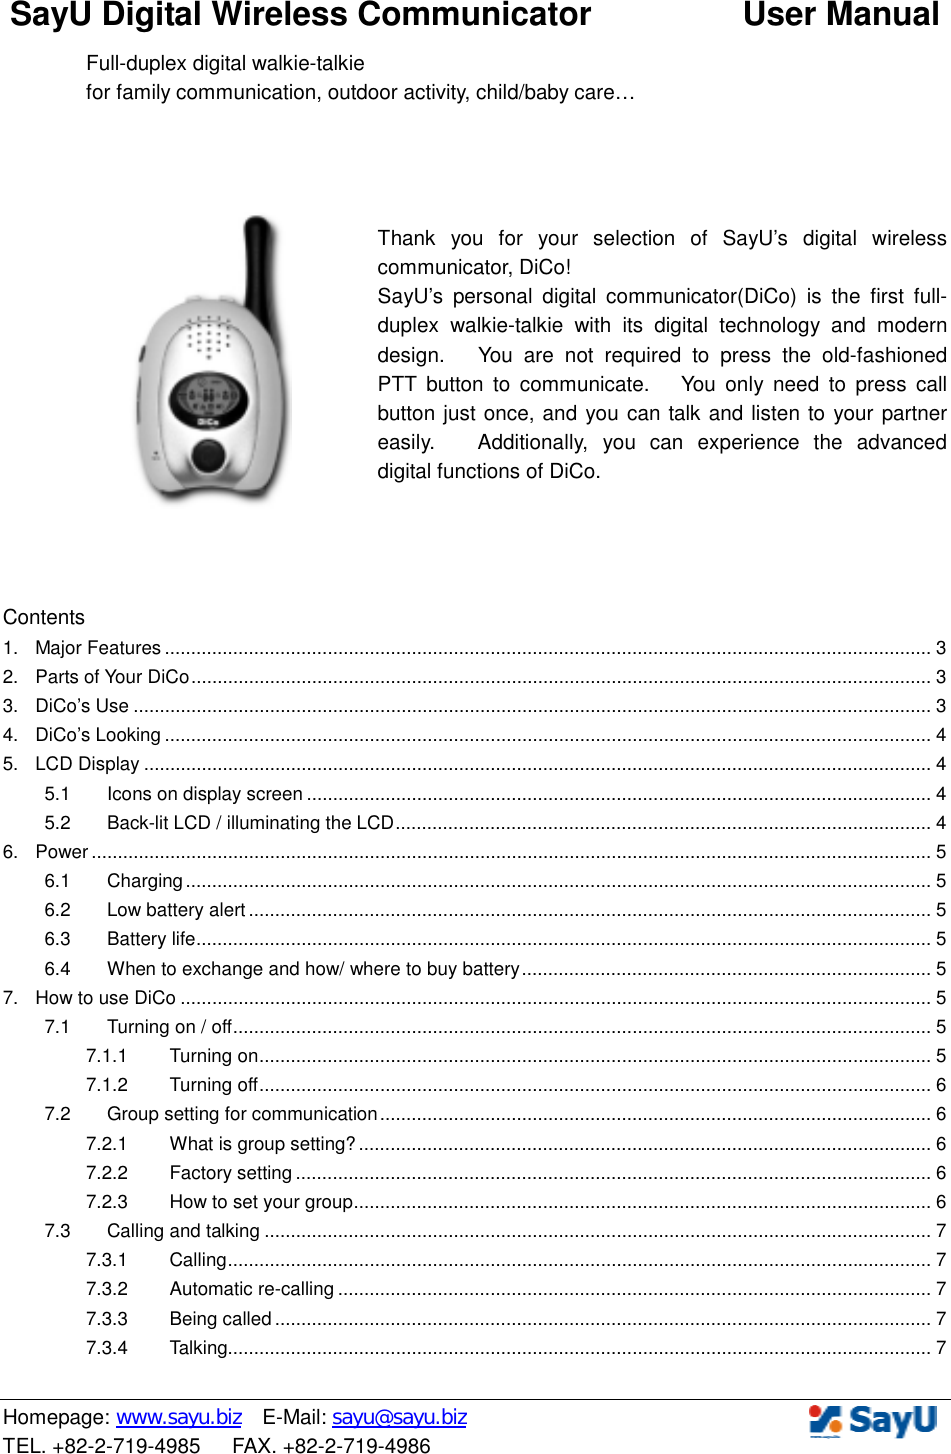 Sayu Xa1000 Digital Wireless Communicator User Manual